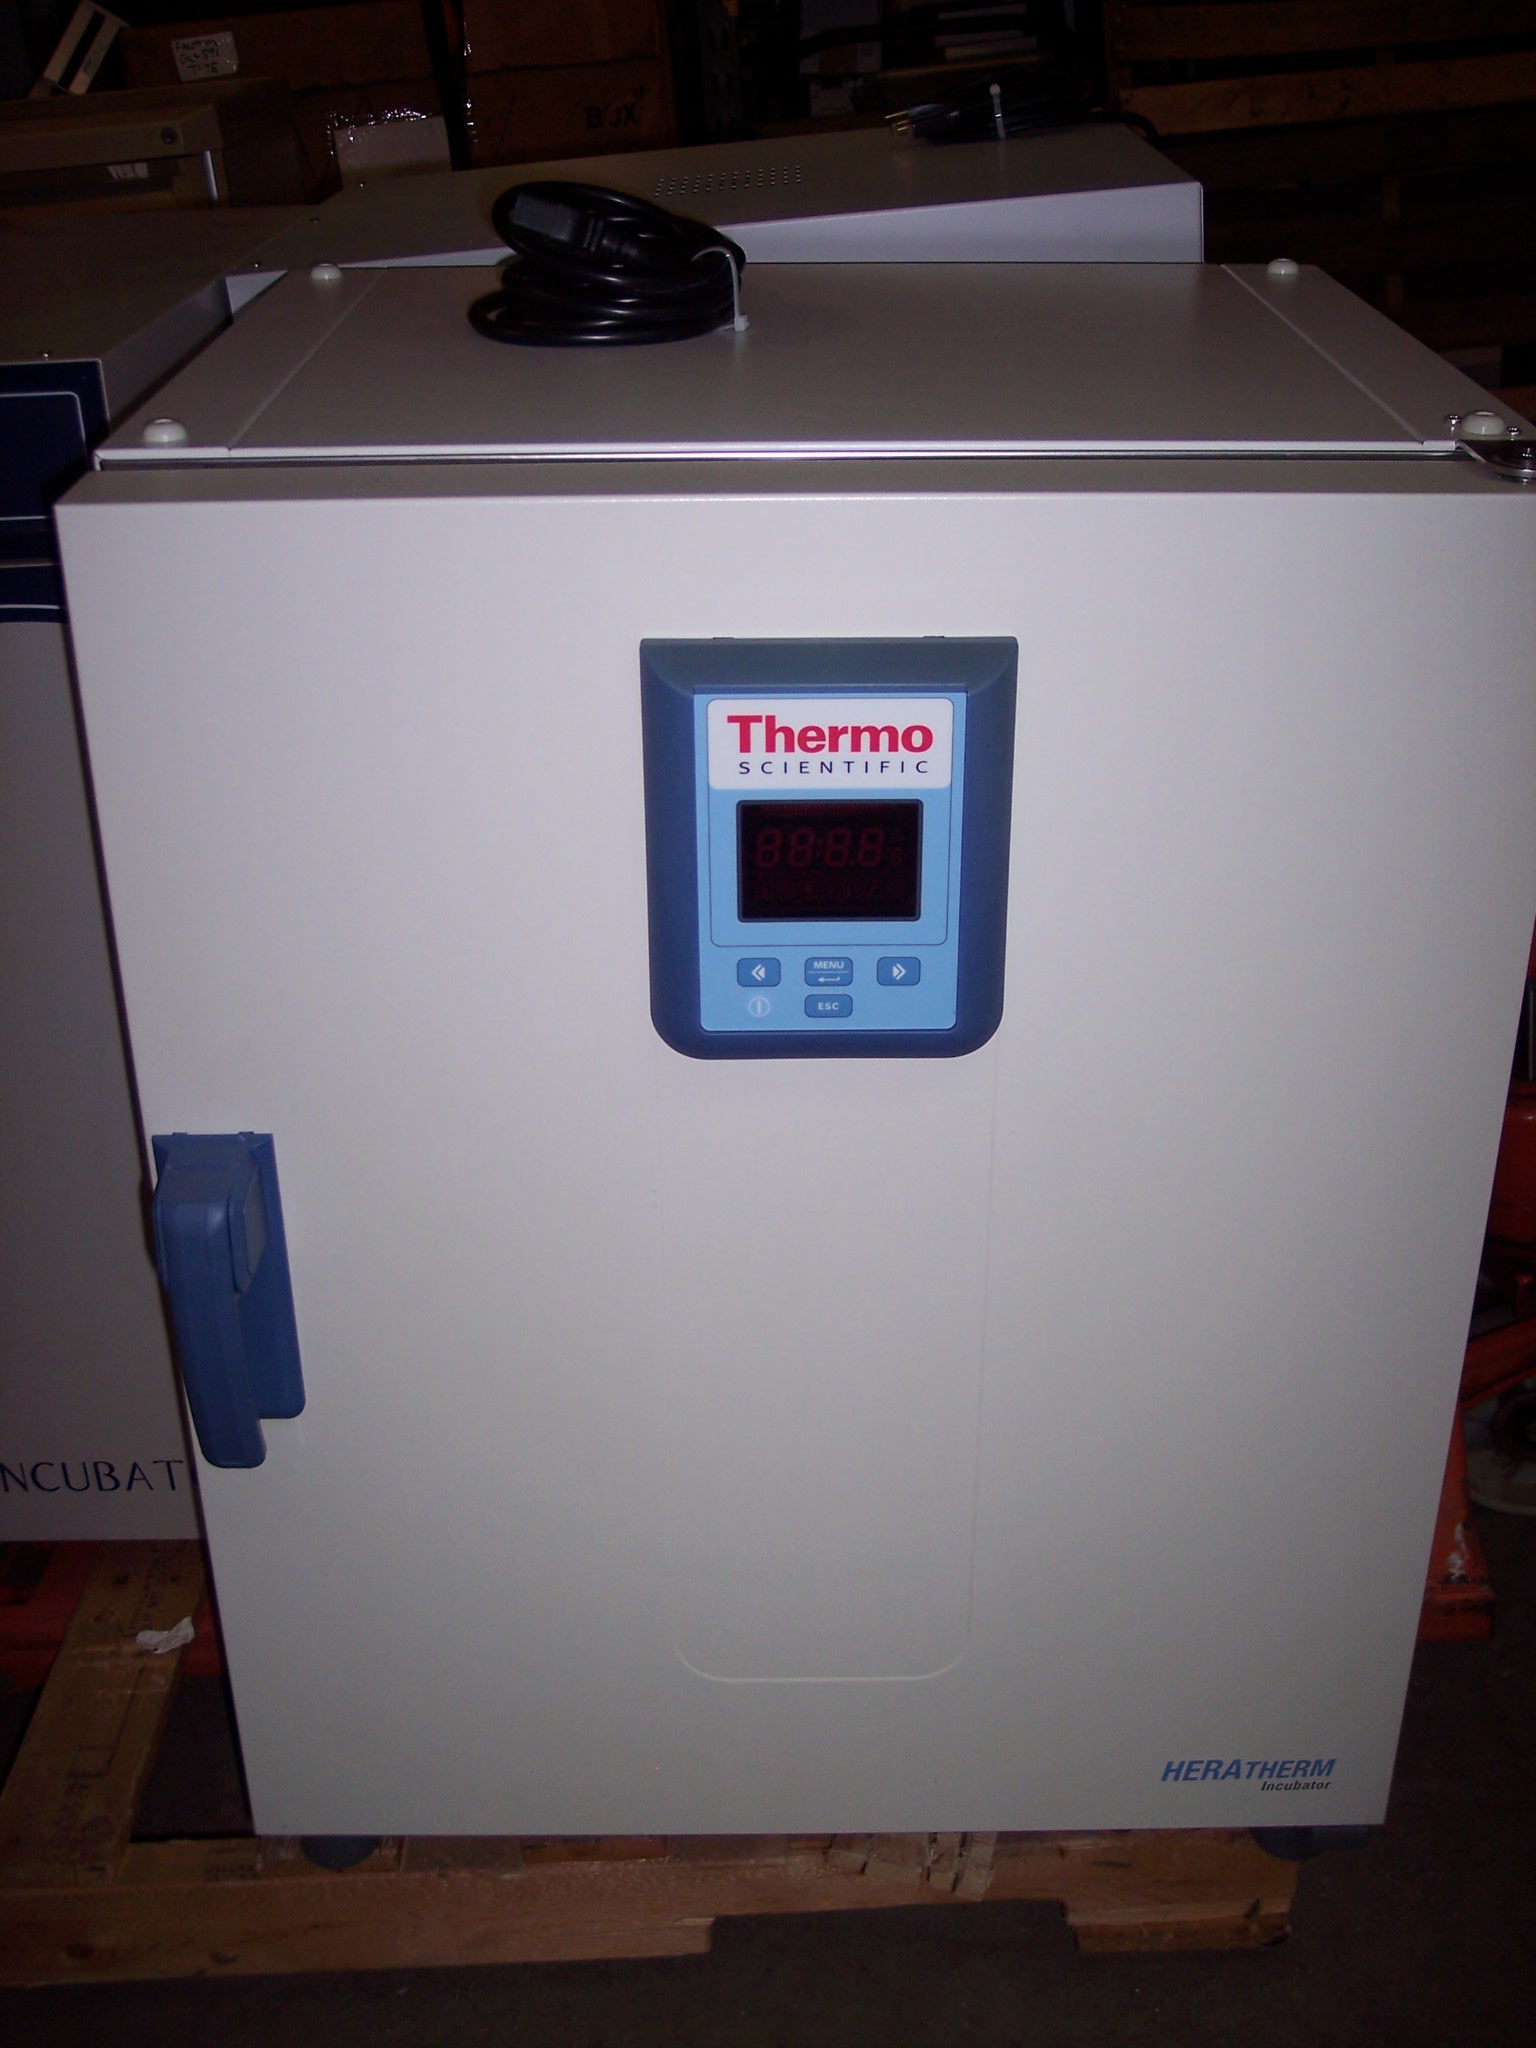 Thermo Scientific Heratherm IGS100